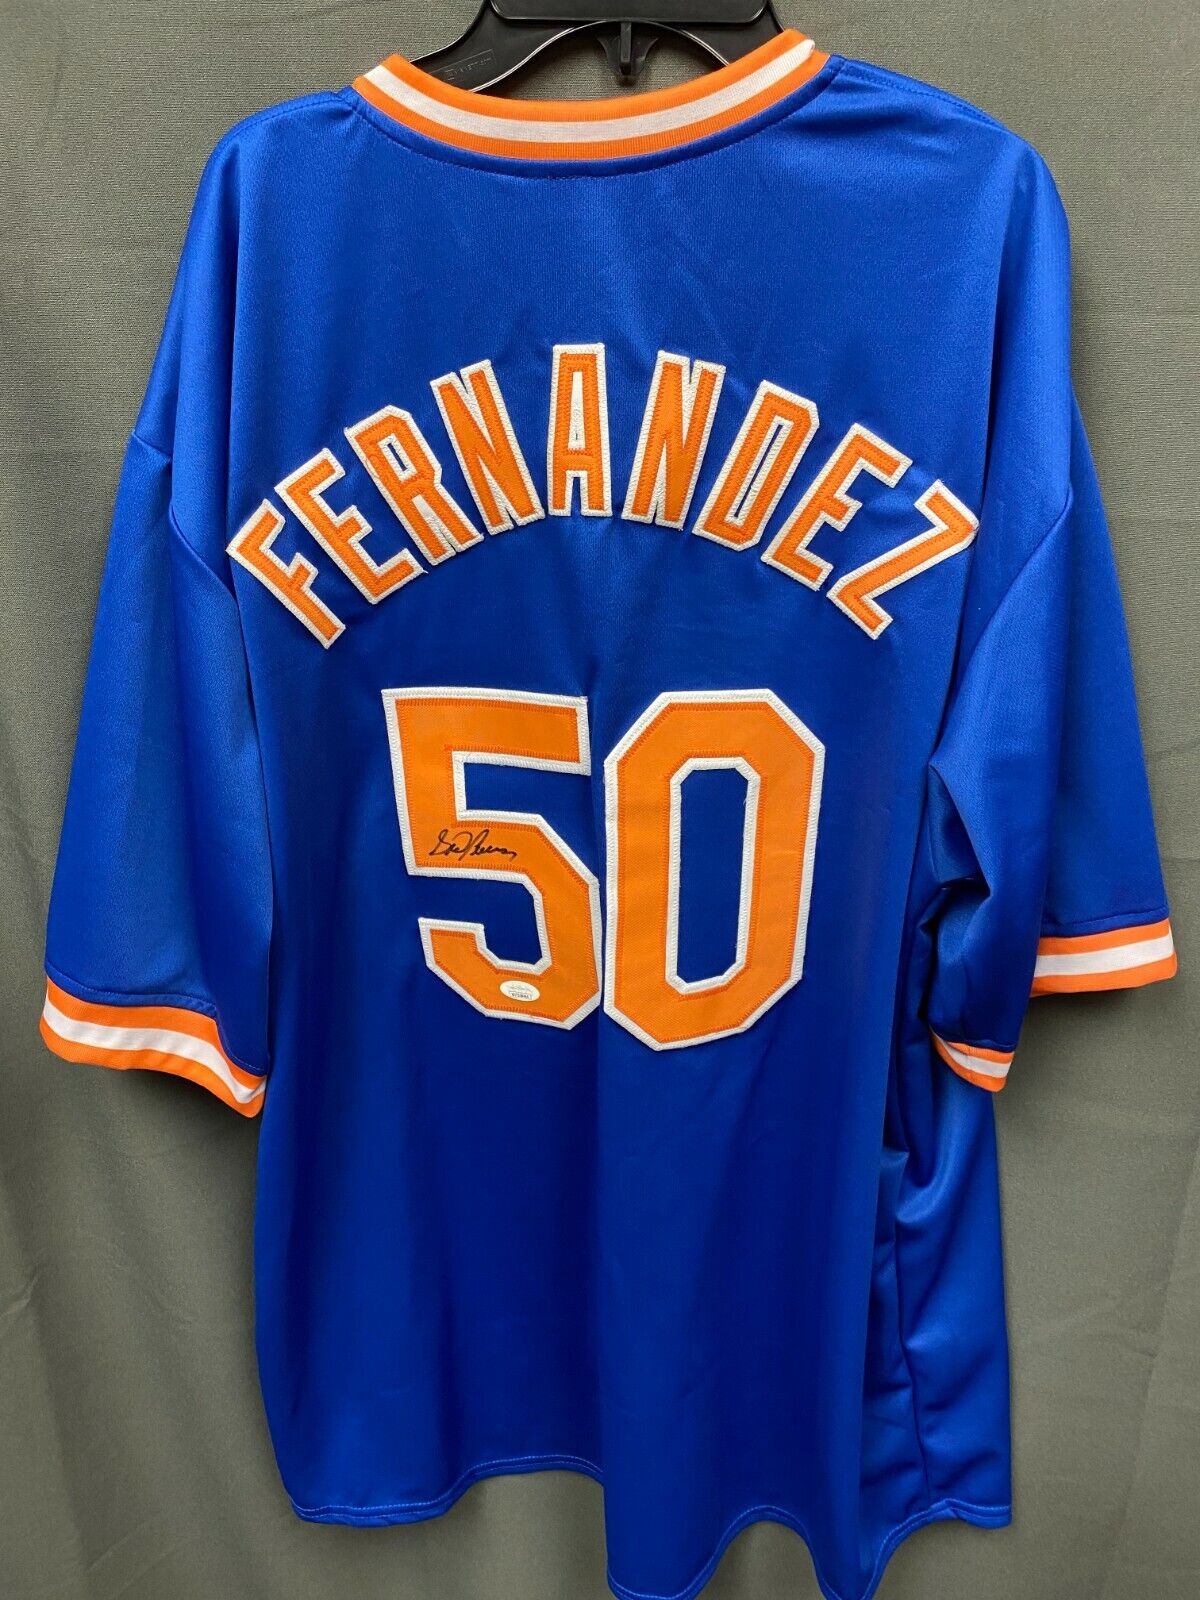 Sid Fernandez #50 Signed Mets Baseball Jersey Autographed AUTO JSA COA Sz XL